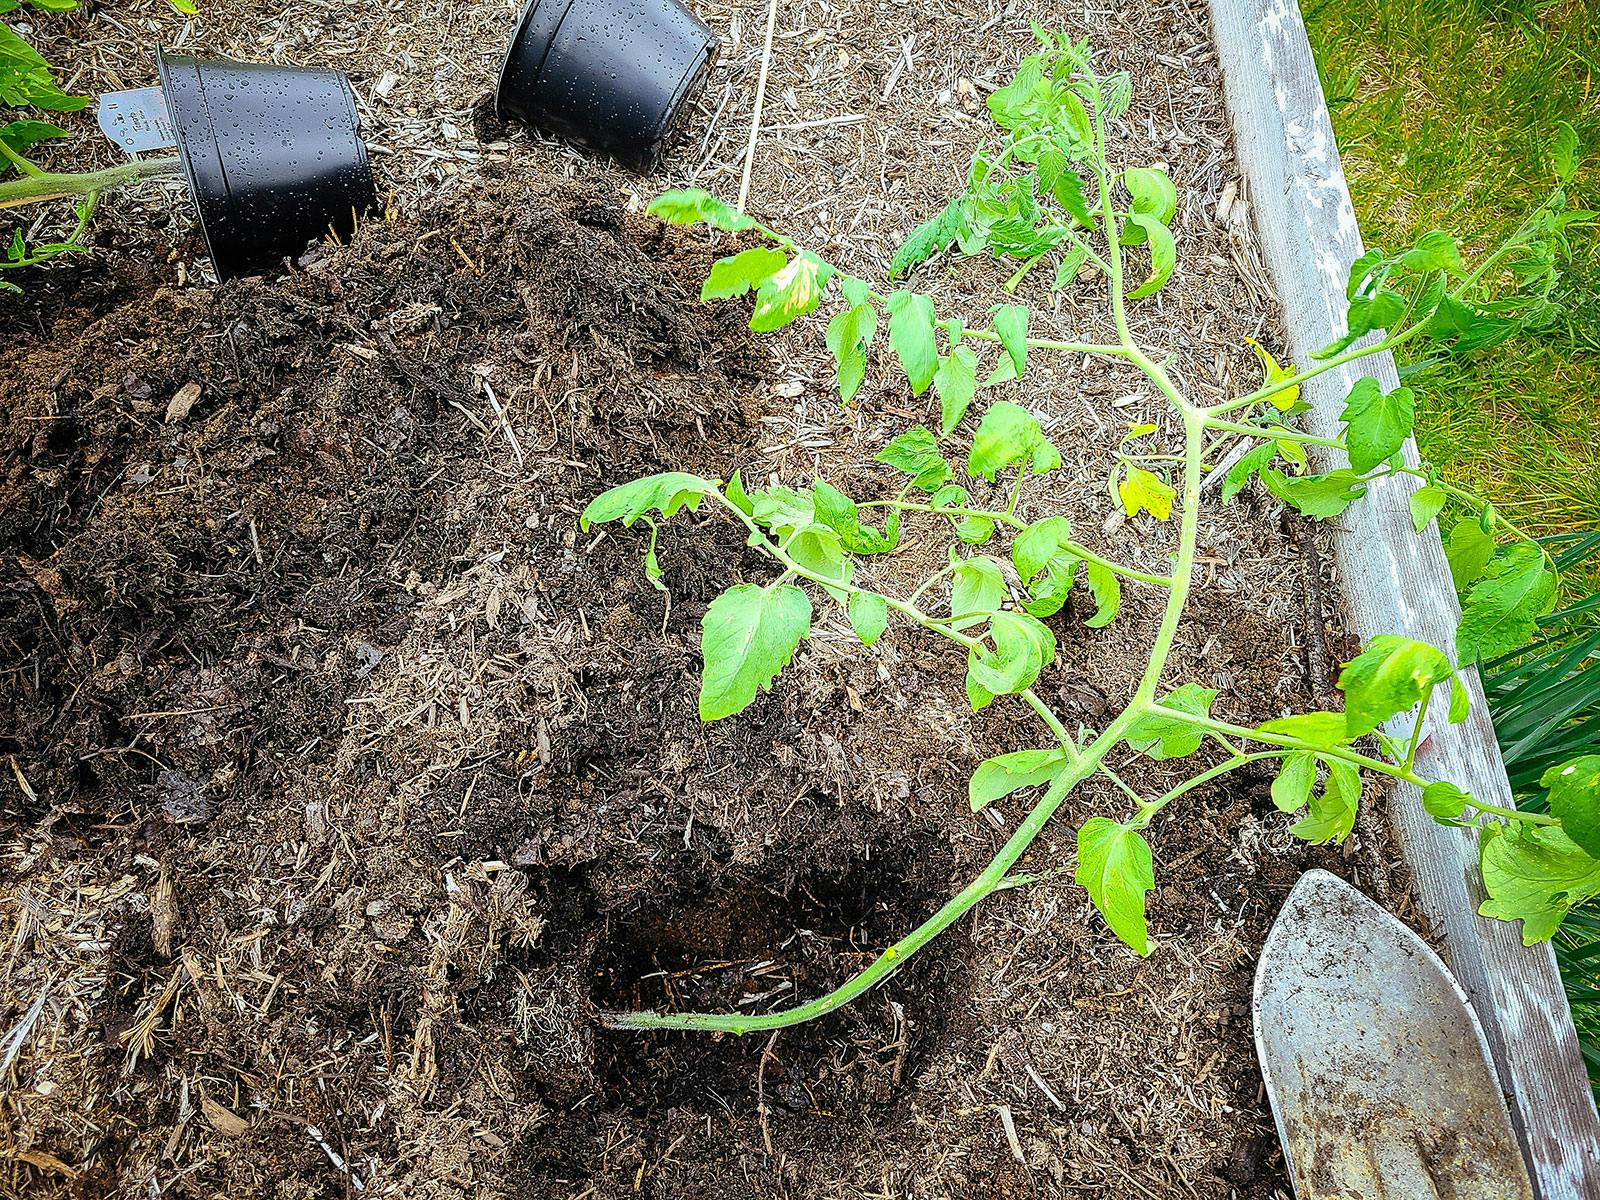 Planting tomatoes sideways